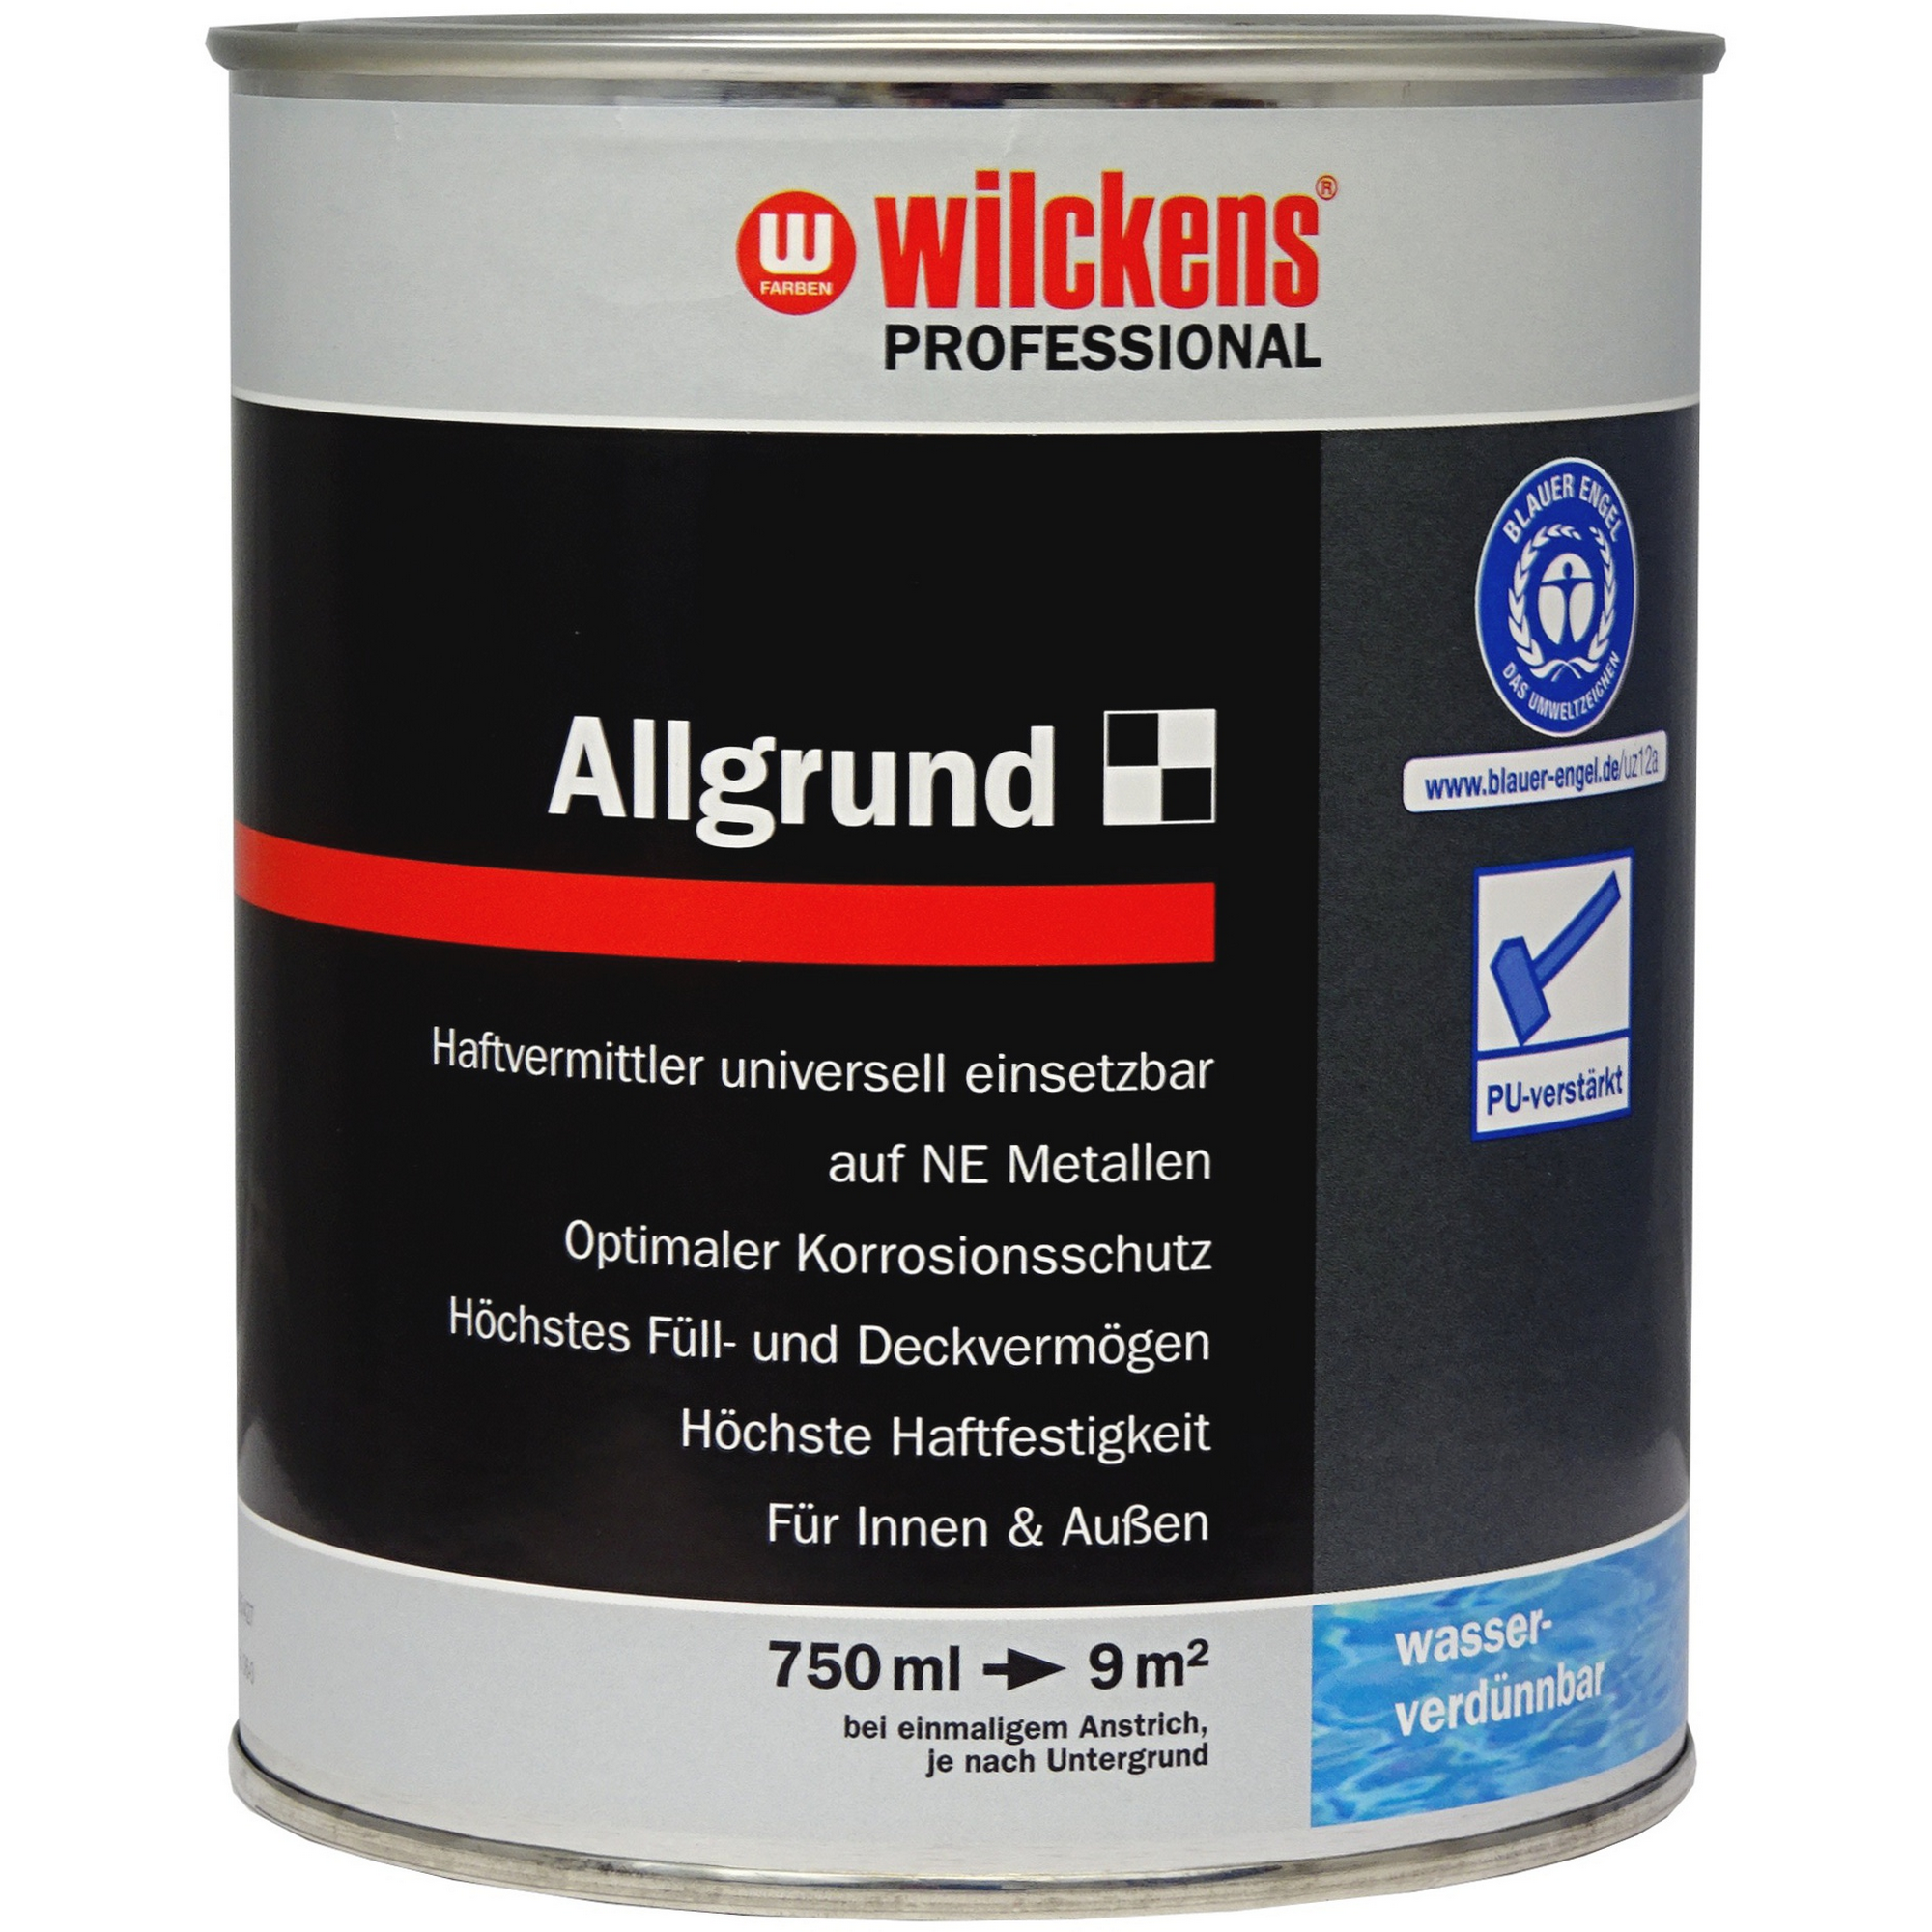 Allgrund 'Professional' weiß 750 ml + product picture